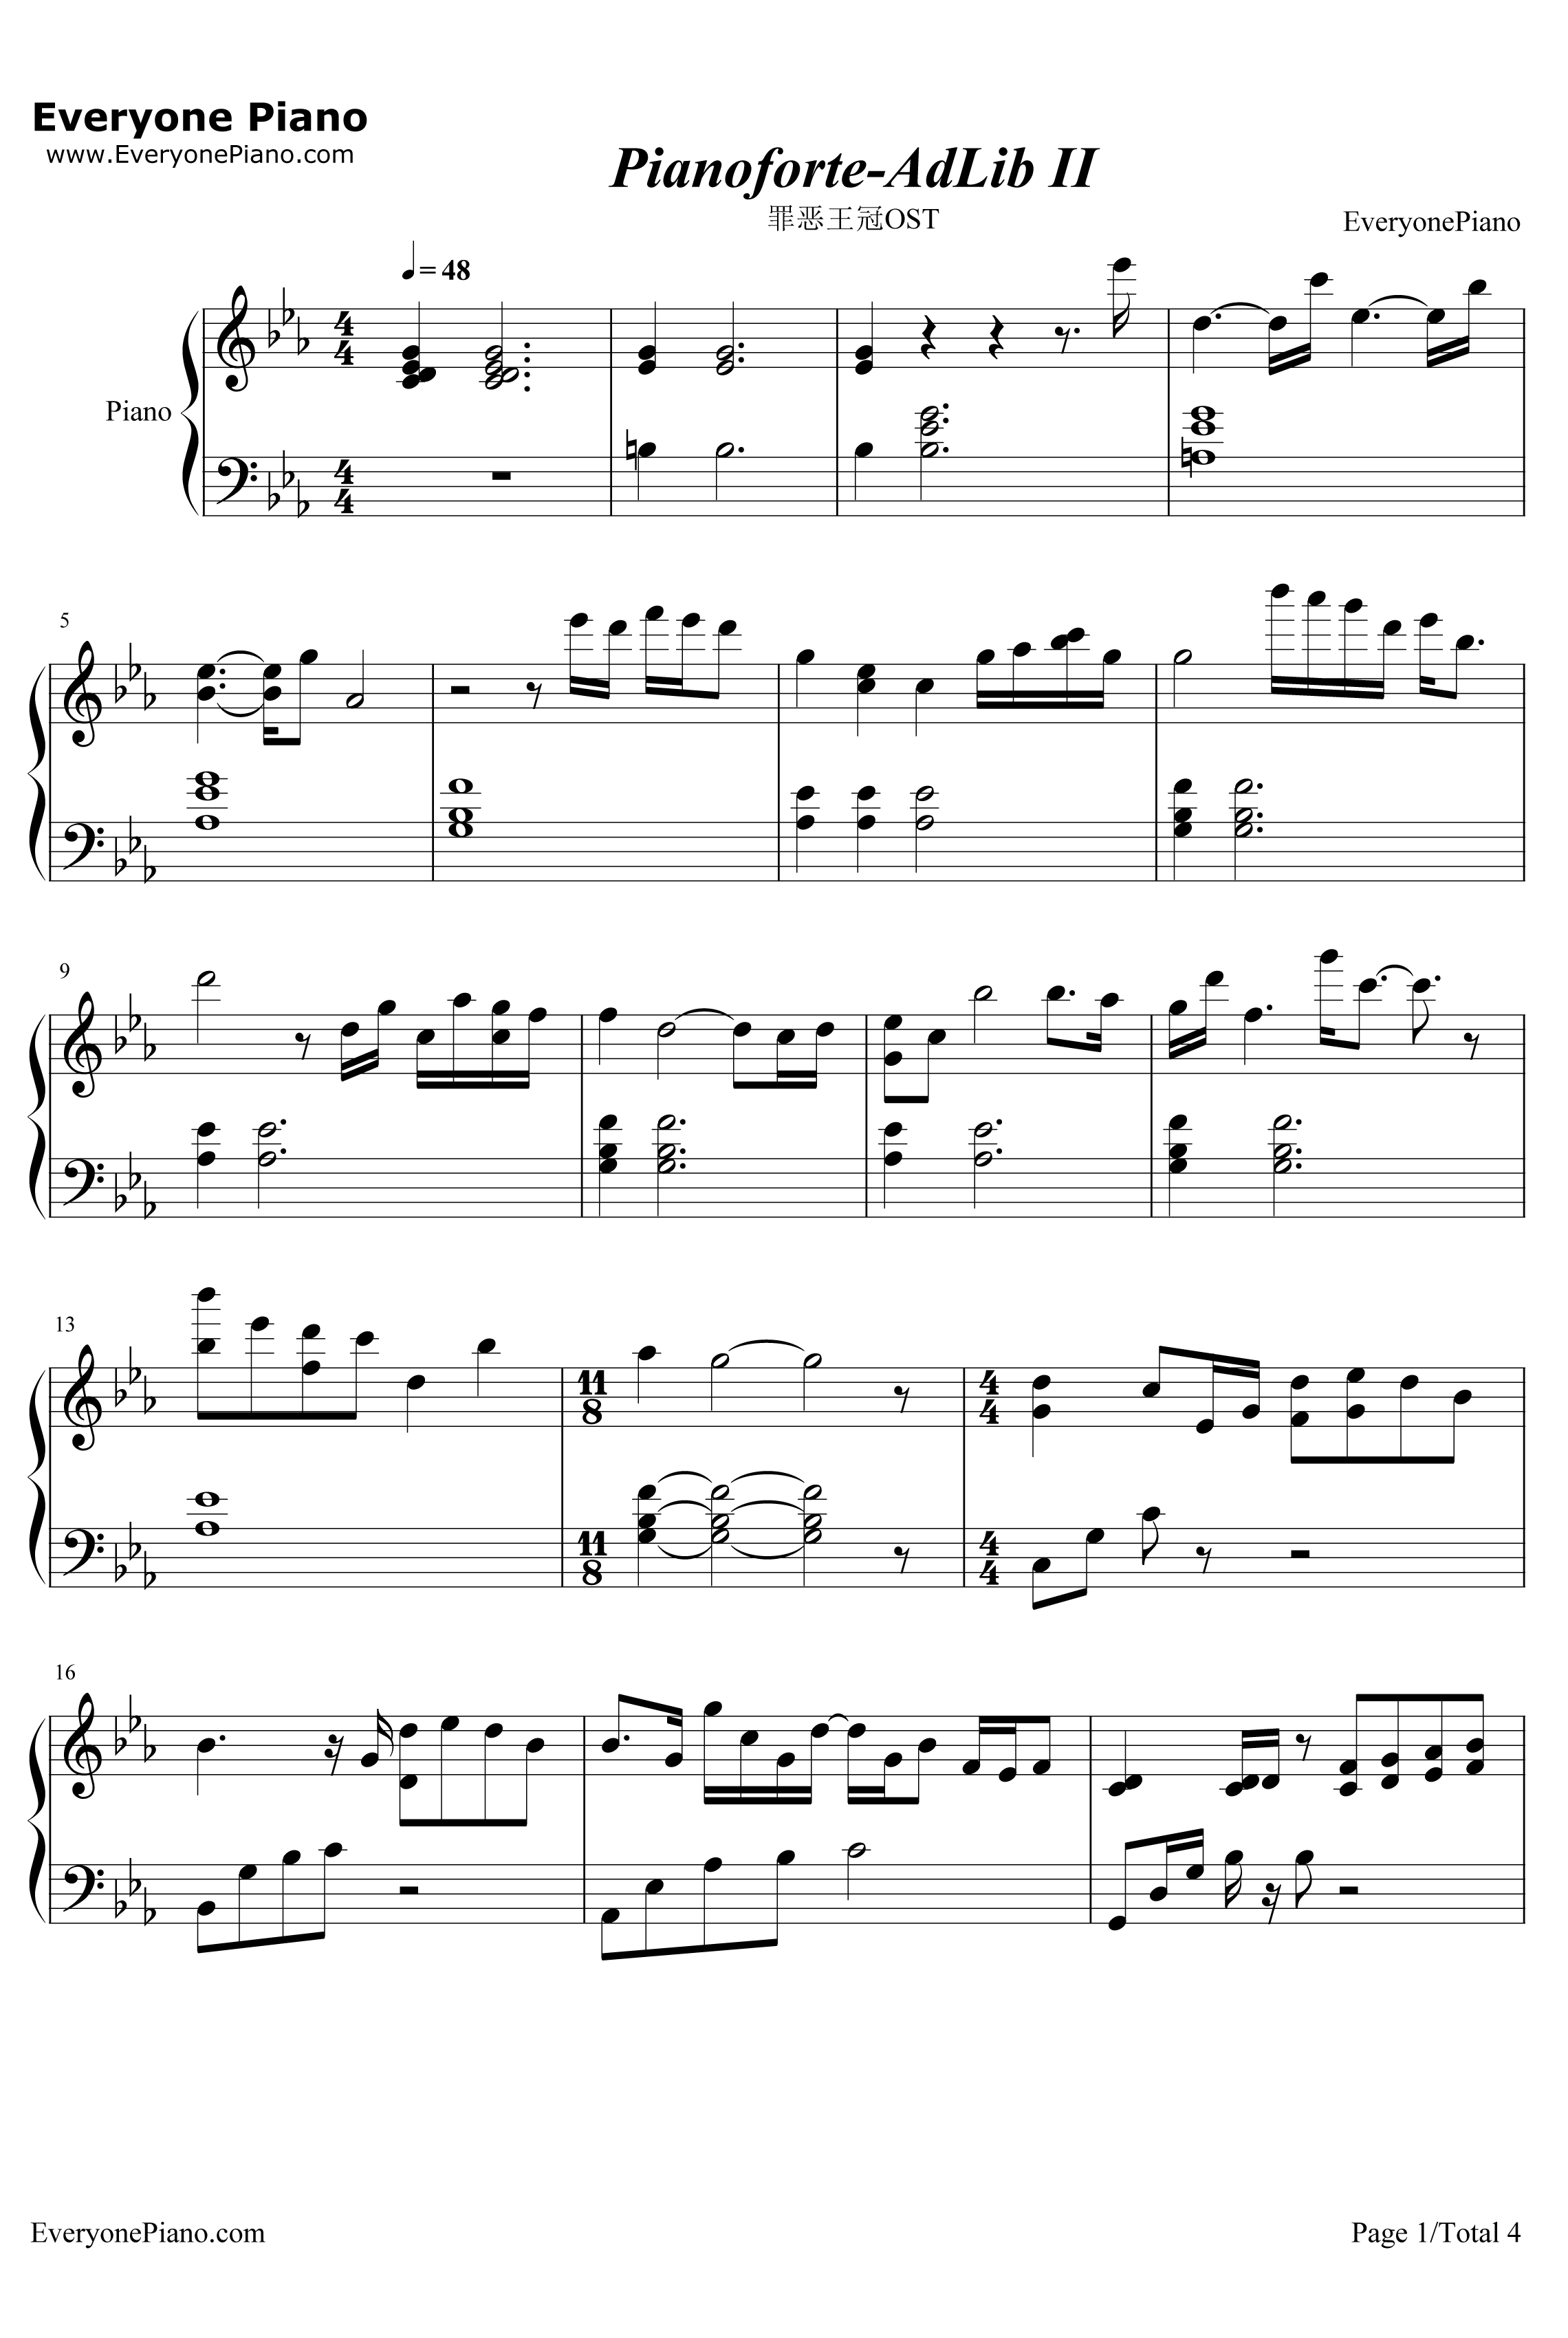 Pianoforte钢琴谱-泽野弘之-AdLibII-罪恶王冠OST1